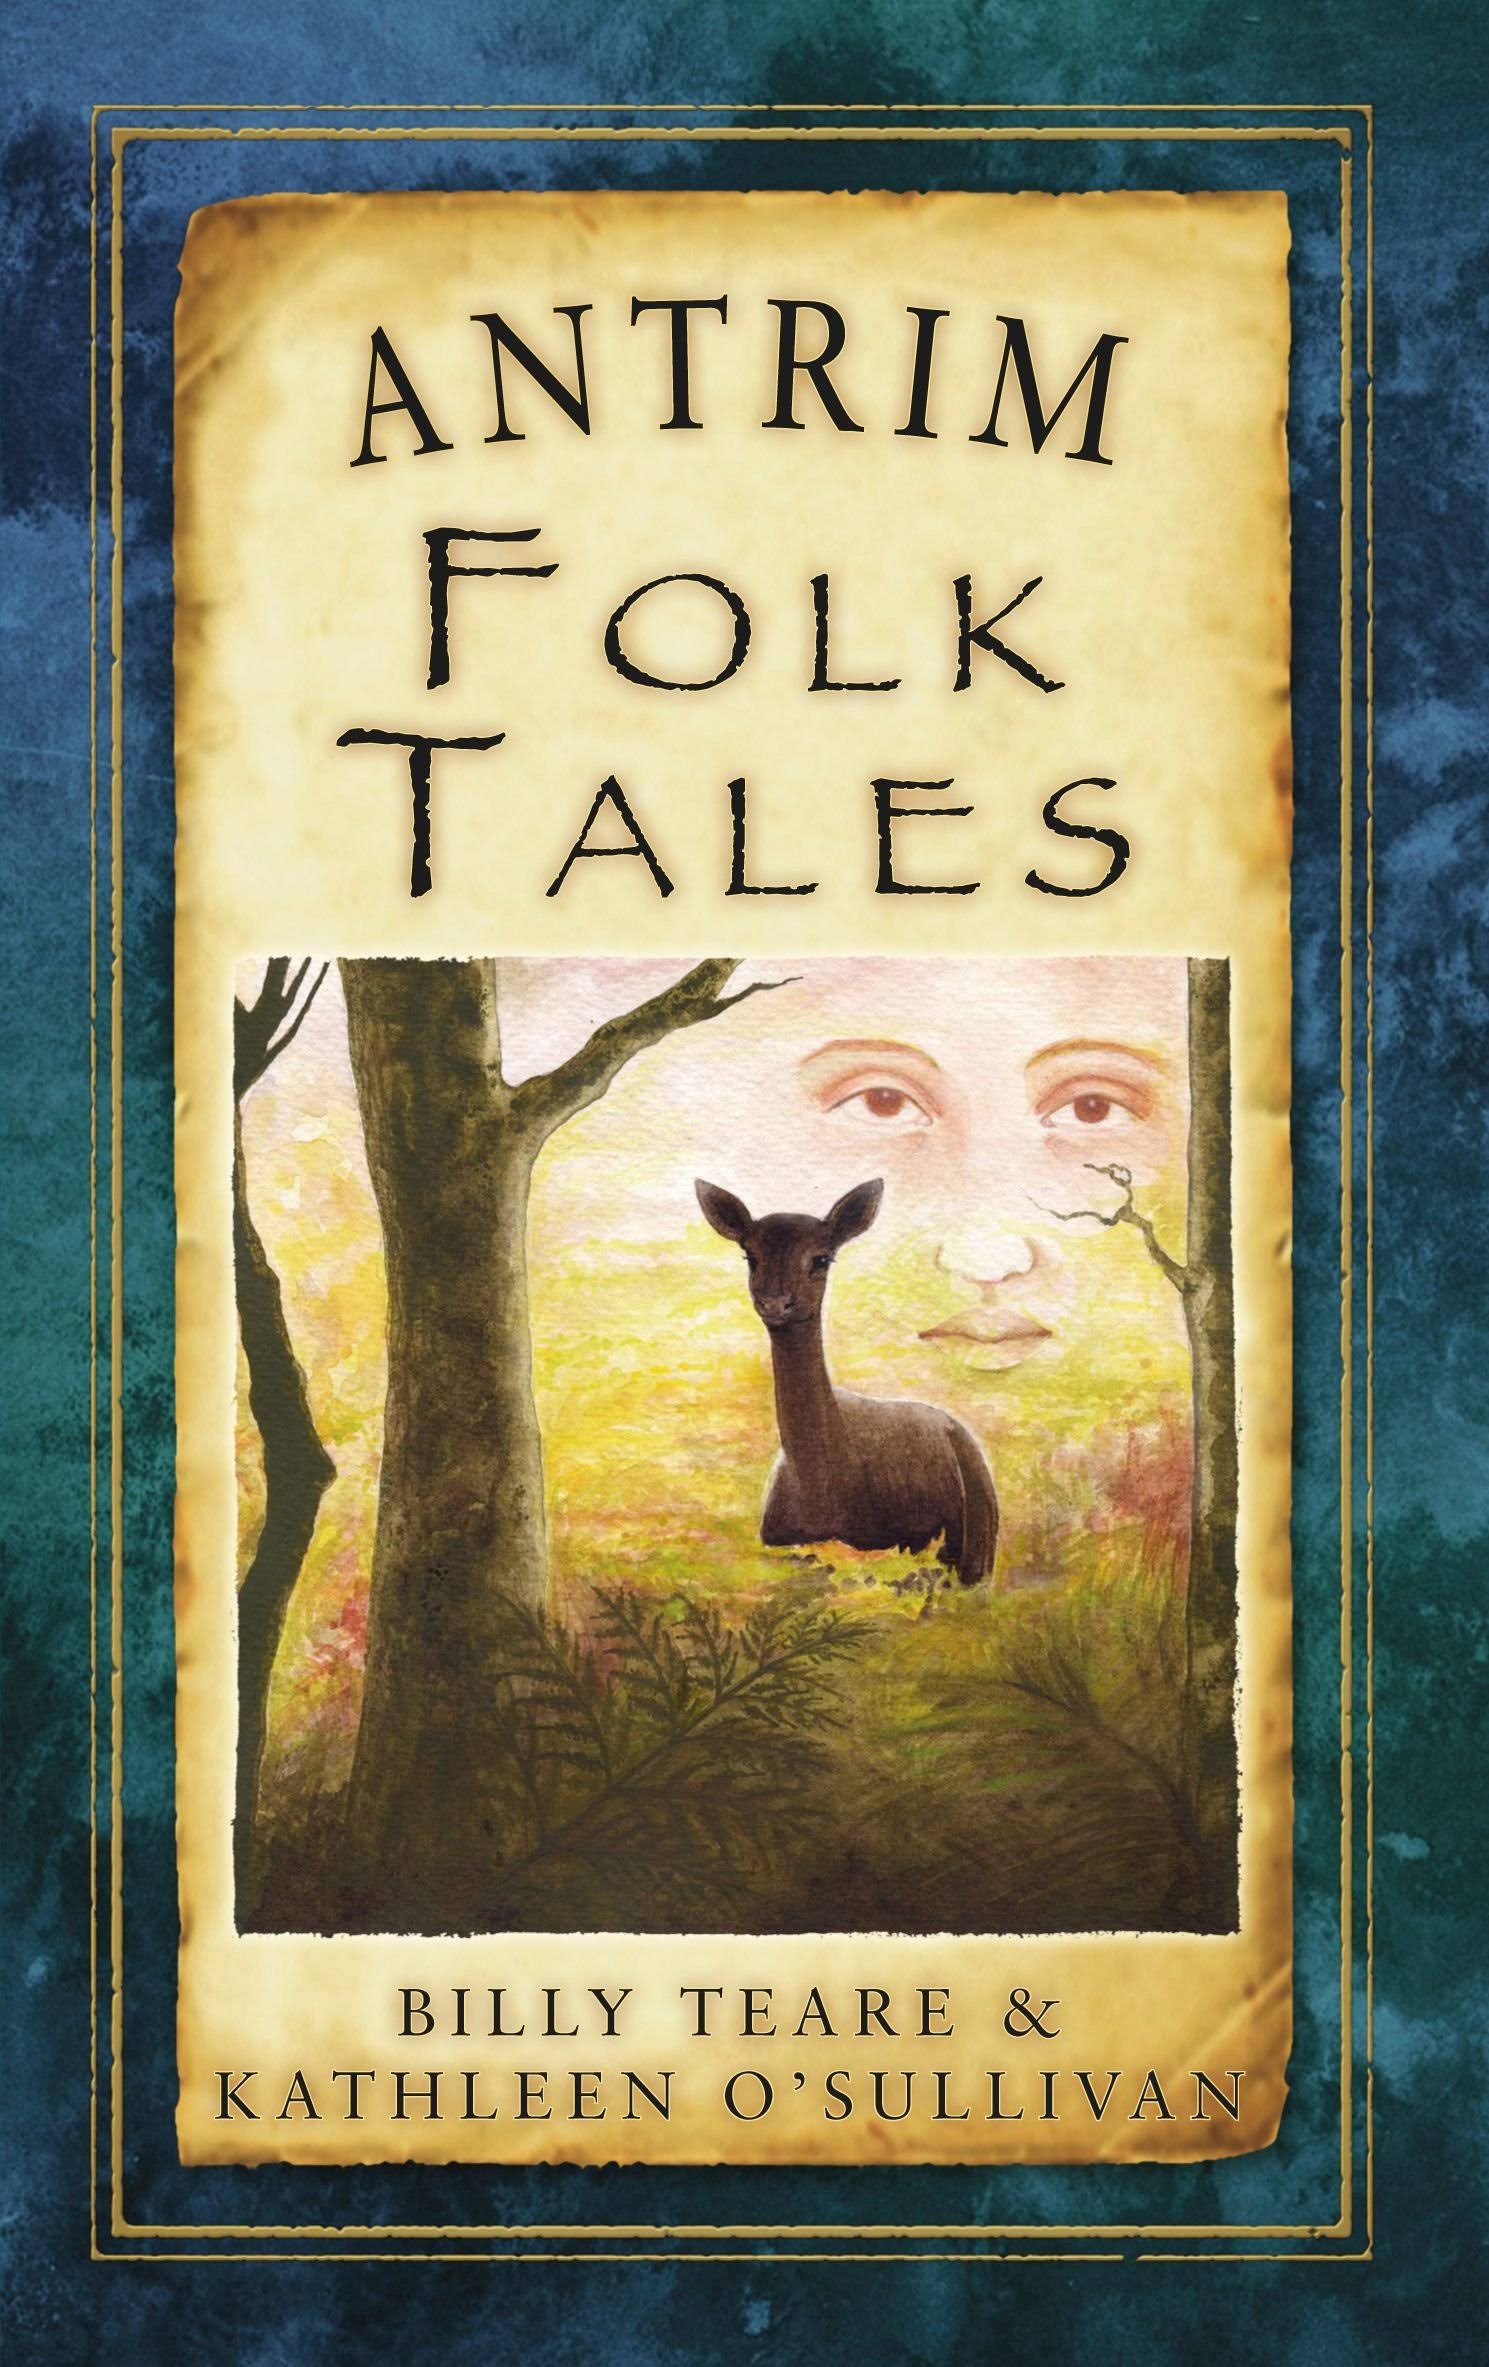 Antrim Folk Tales by Billy Teare